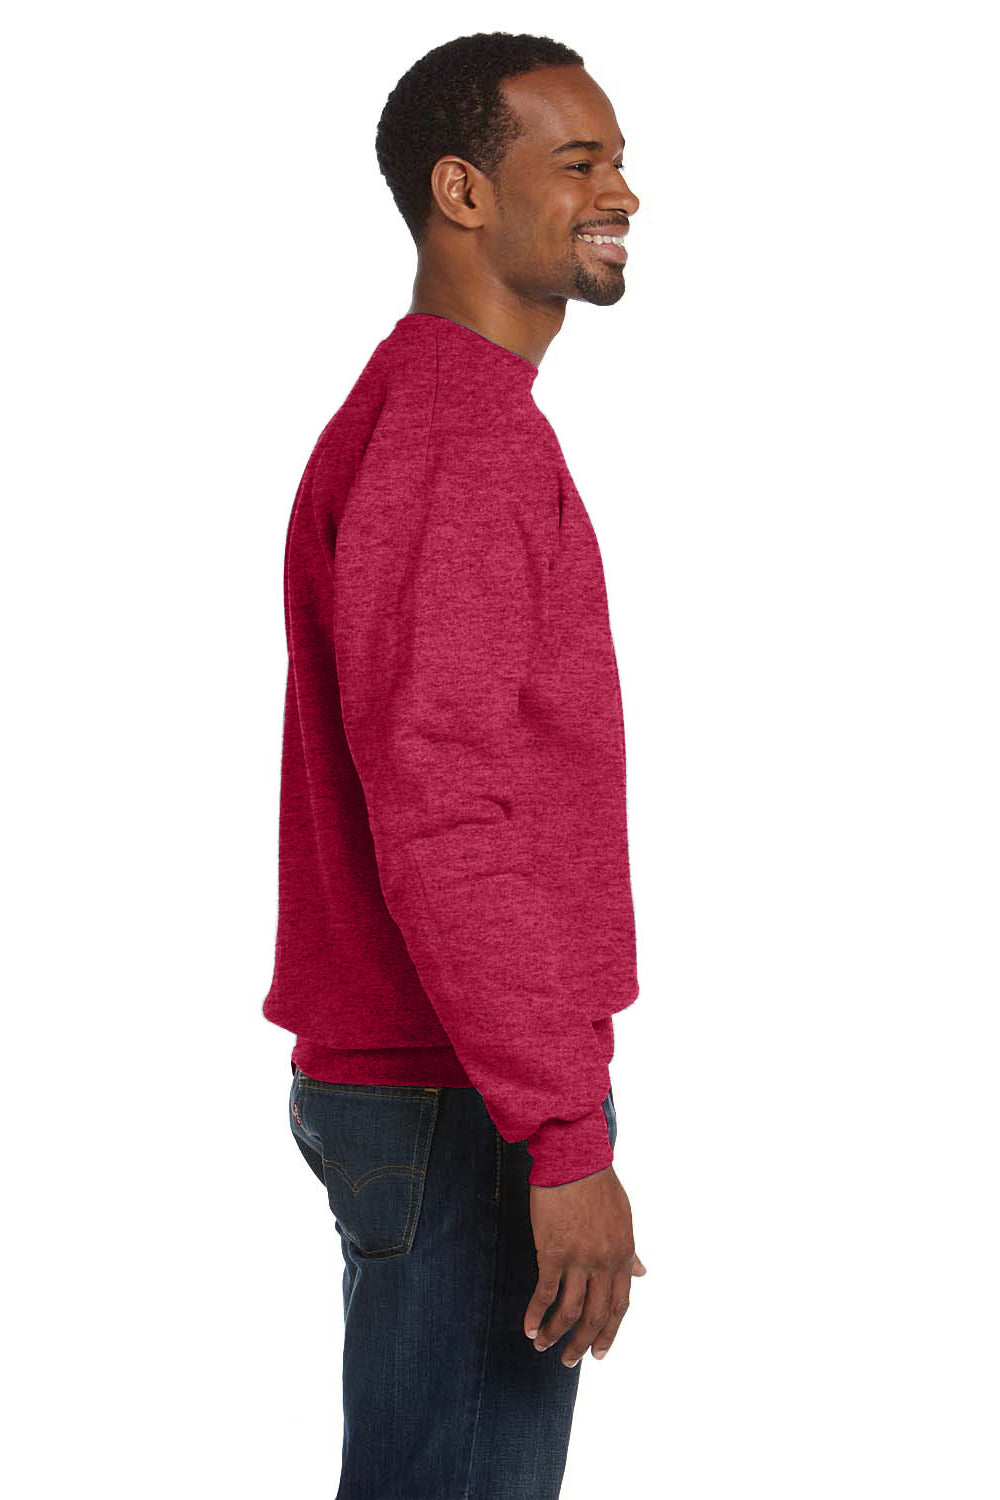 Hanes P160 EcoSmart Print Pro XP Fleece Crewneck Sweatshirt Heather Red Side